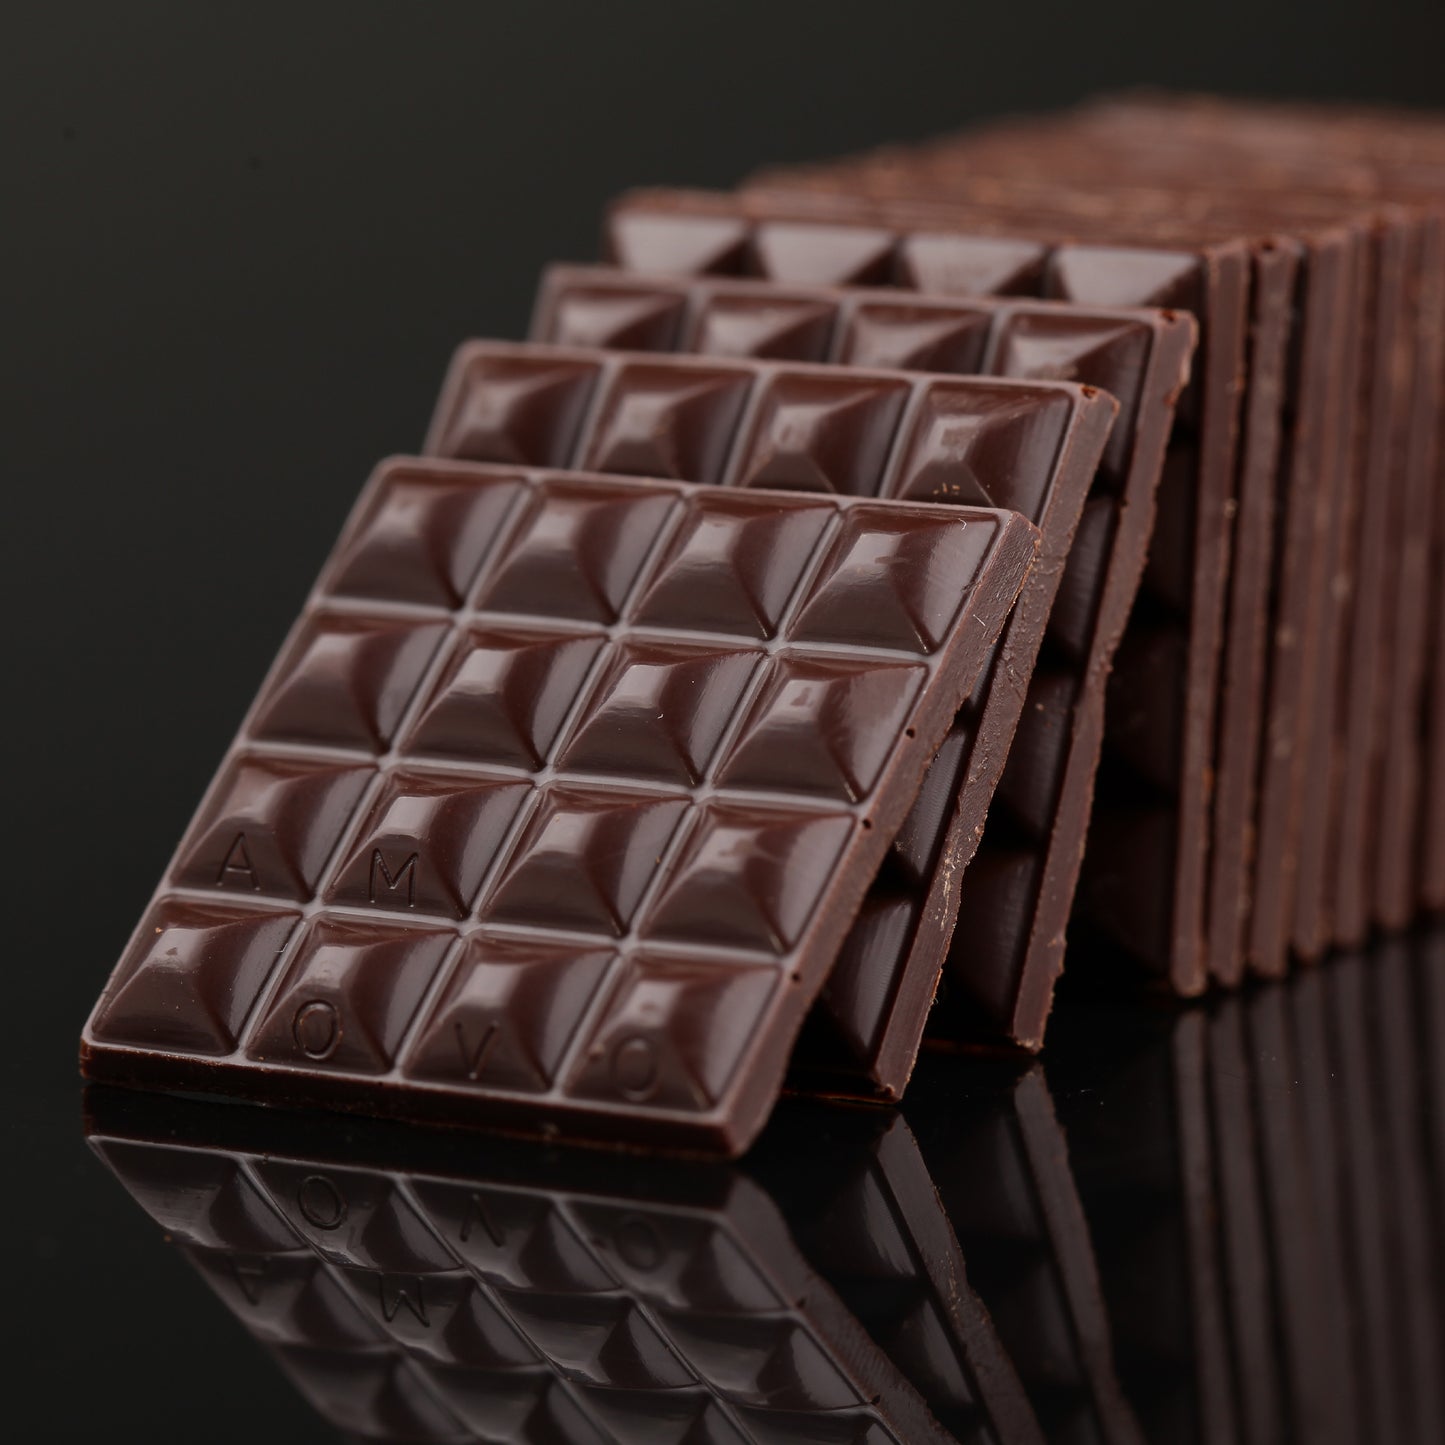 Amotrio Couverture Dark Chocolate 72% Chocolate Pieces